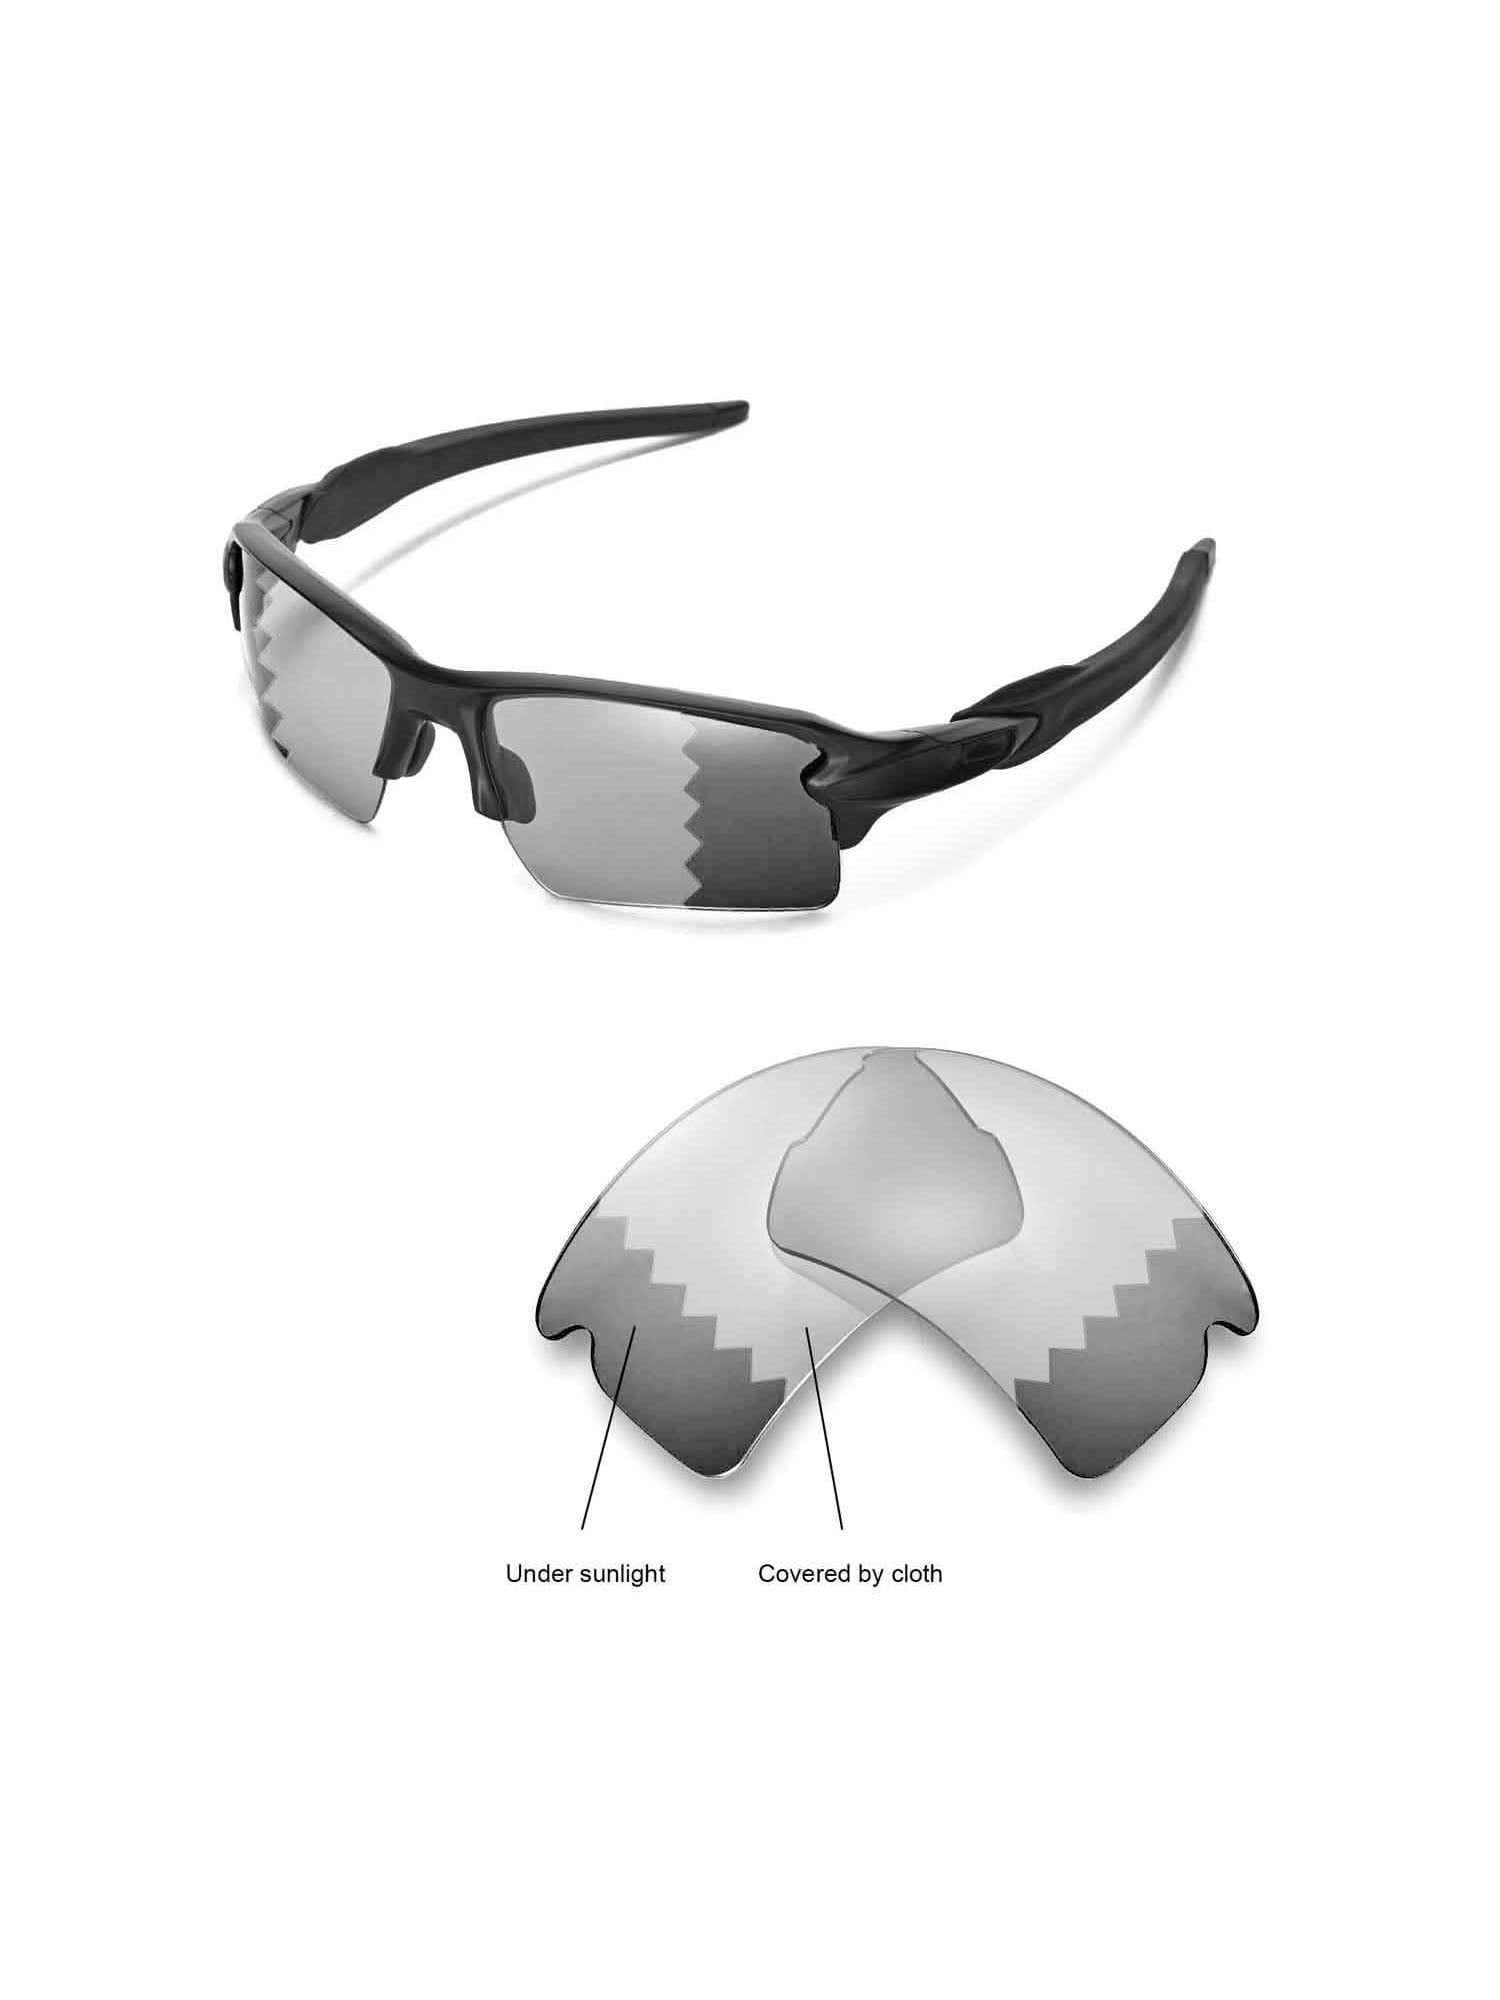 Walleva Transition/Photochromic Polarized Replacement Lenses for Oakley  Flak  XL Sunglasses 